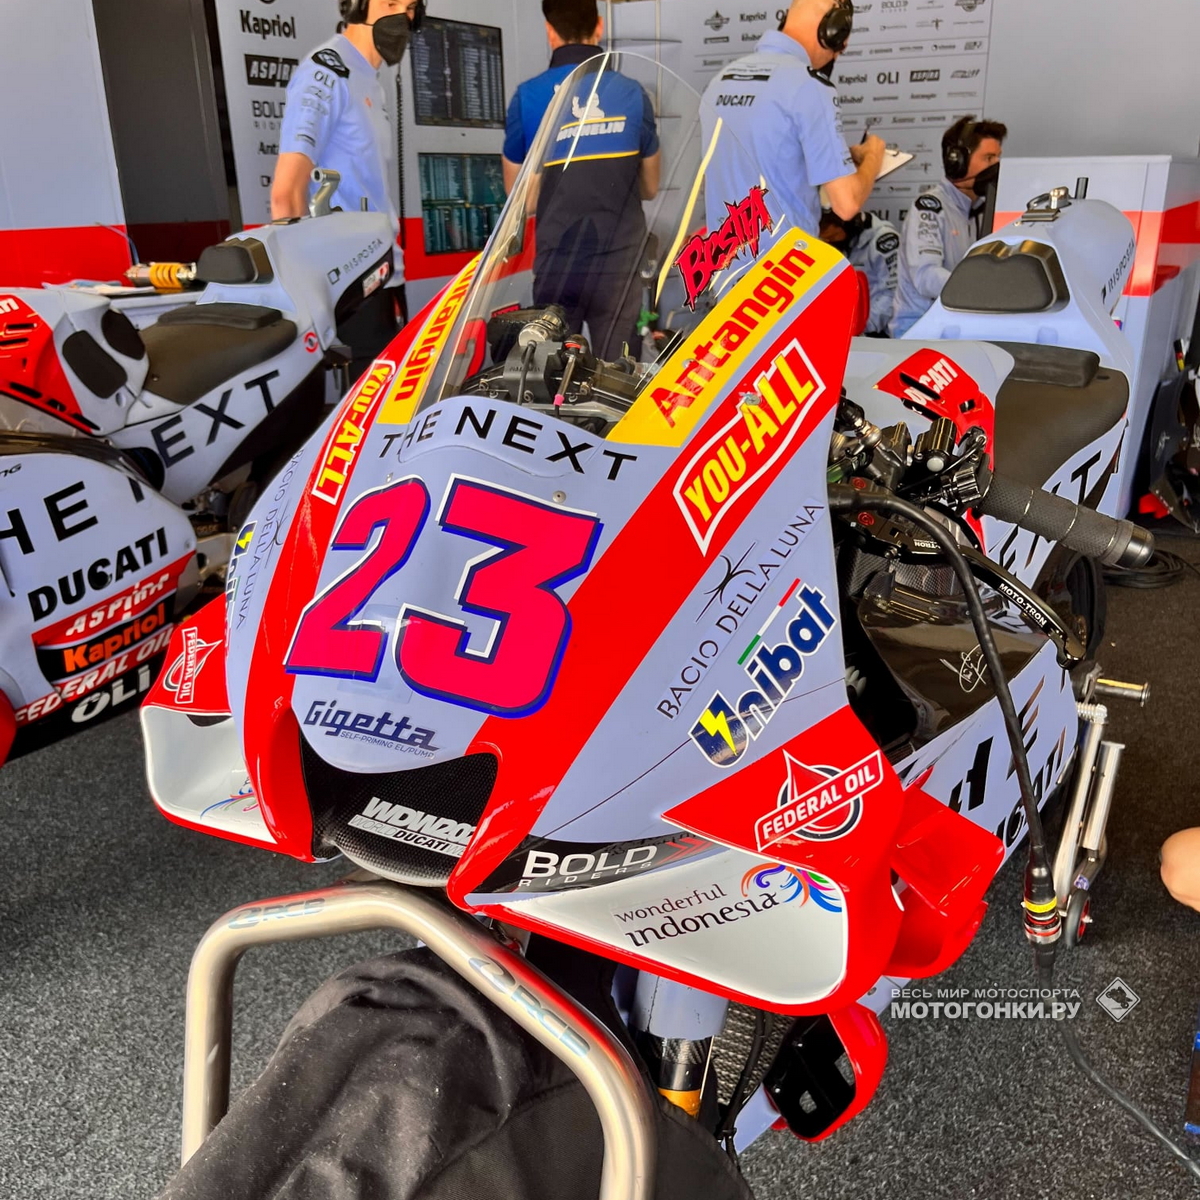 Аэродинамический пакет GP22 на прототипе Ducati GP21 Энеа Бастианини